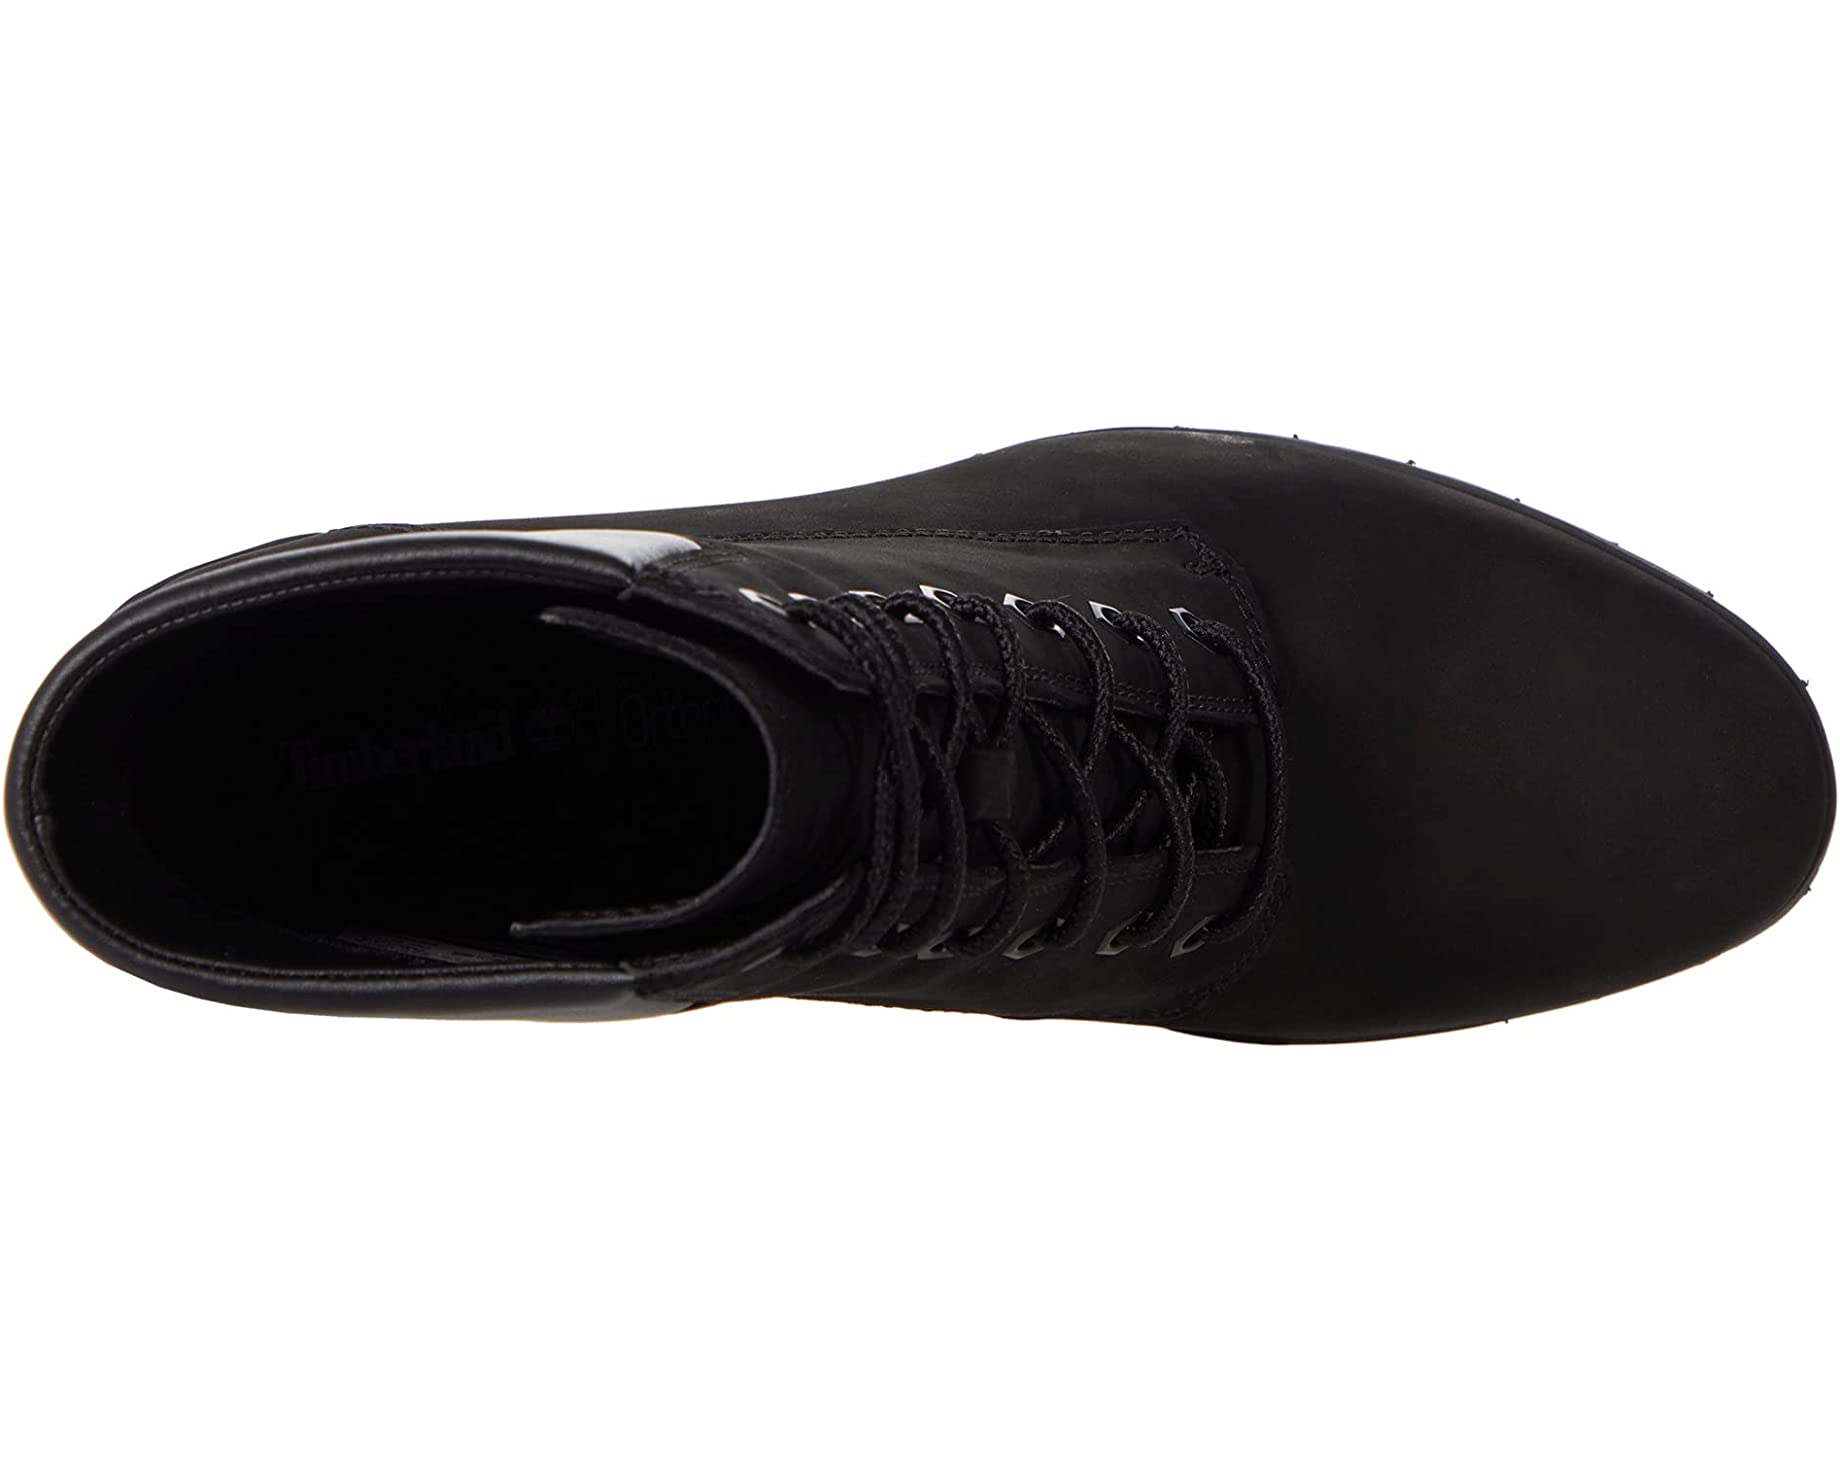 Ботинки Allington 6 Lace-Up Timberland, черный ботинок atmos x 6 дюймов timberland черный